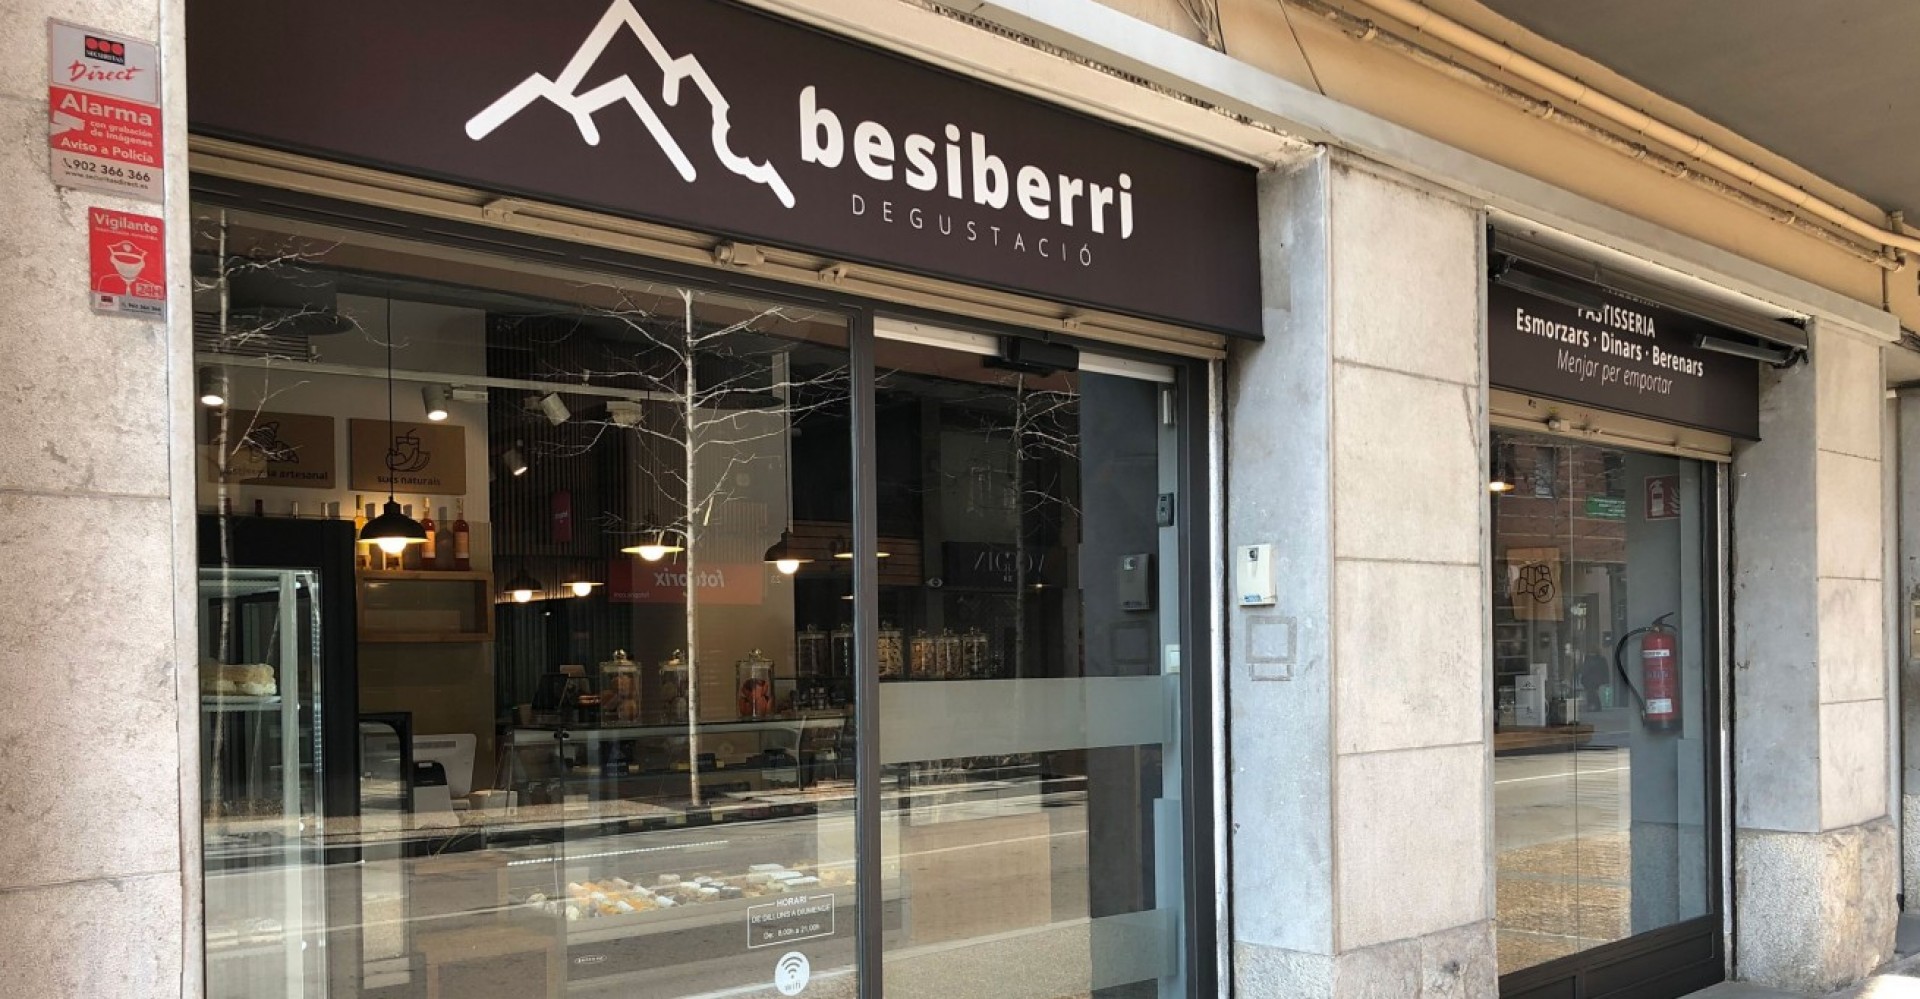 Besiberri Degustació